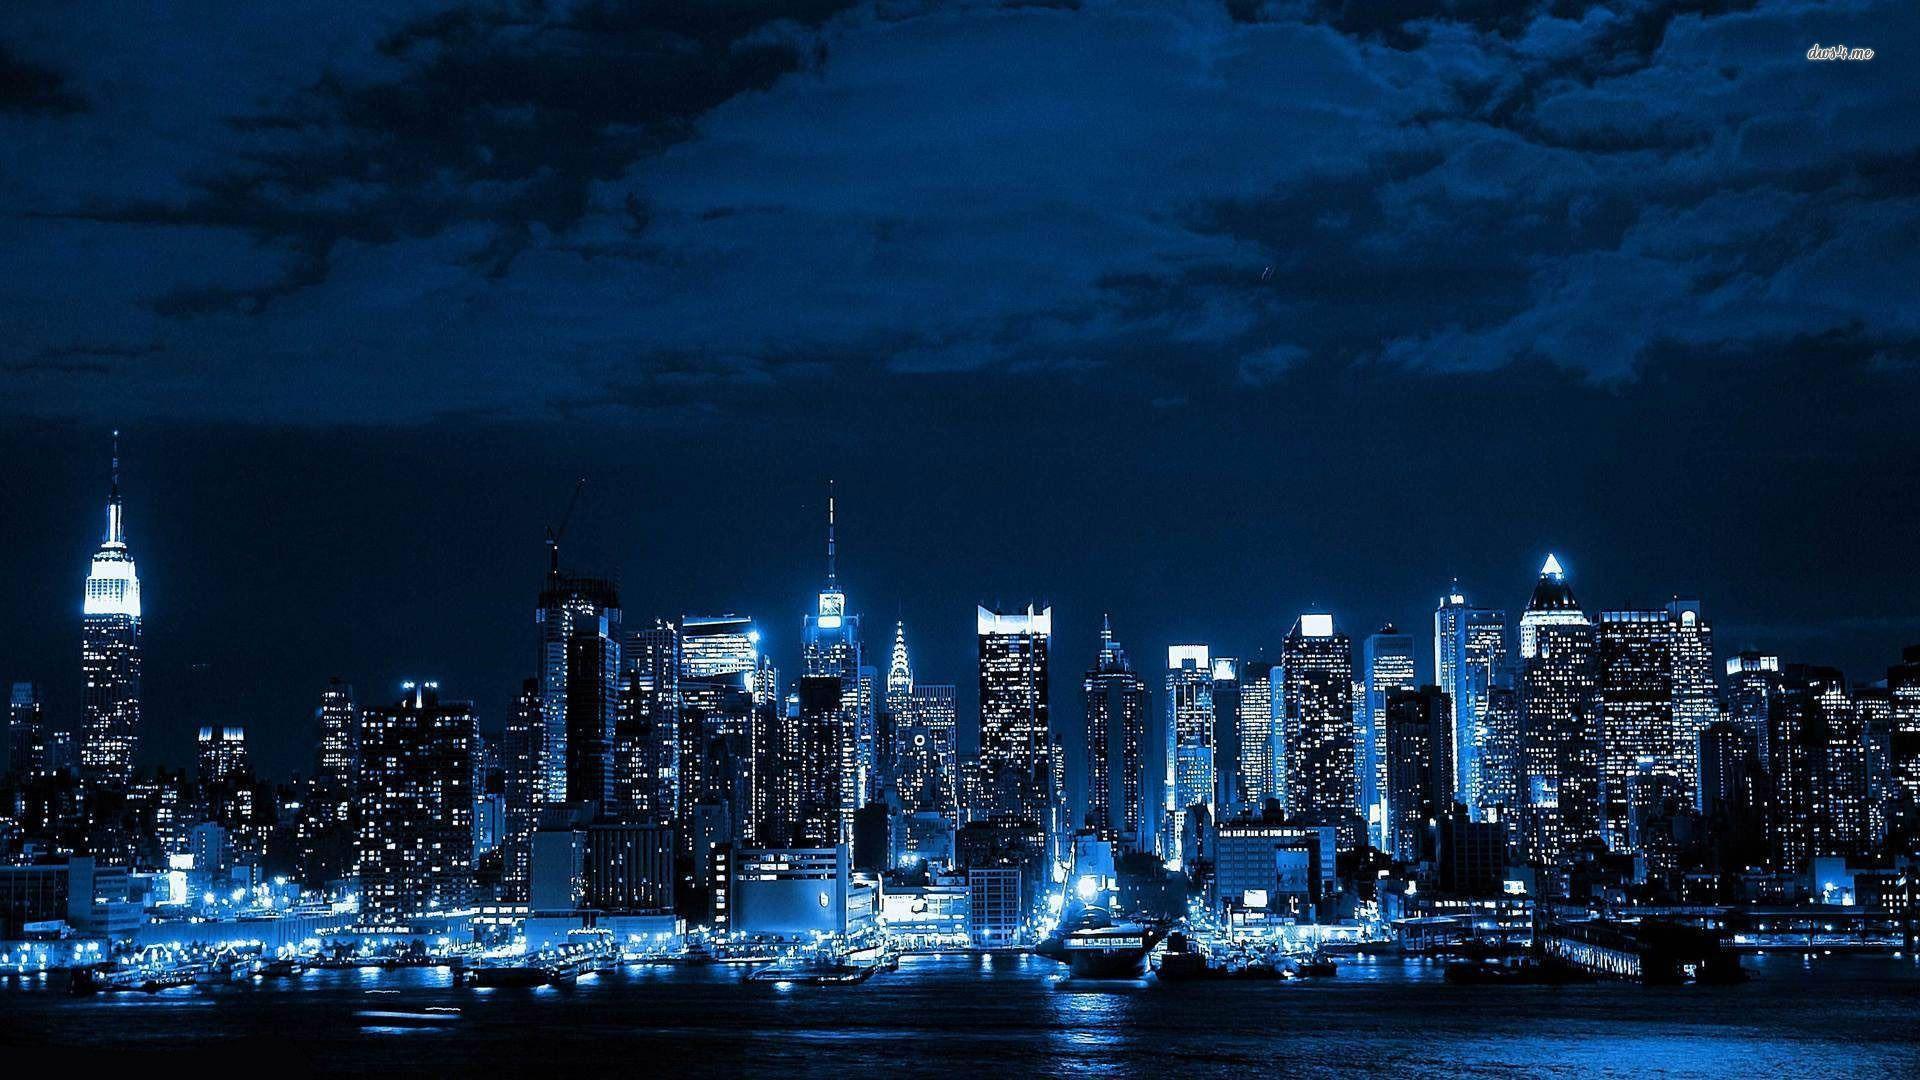 New York City Skylines at Night Full HD Wallpaper. High